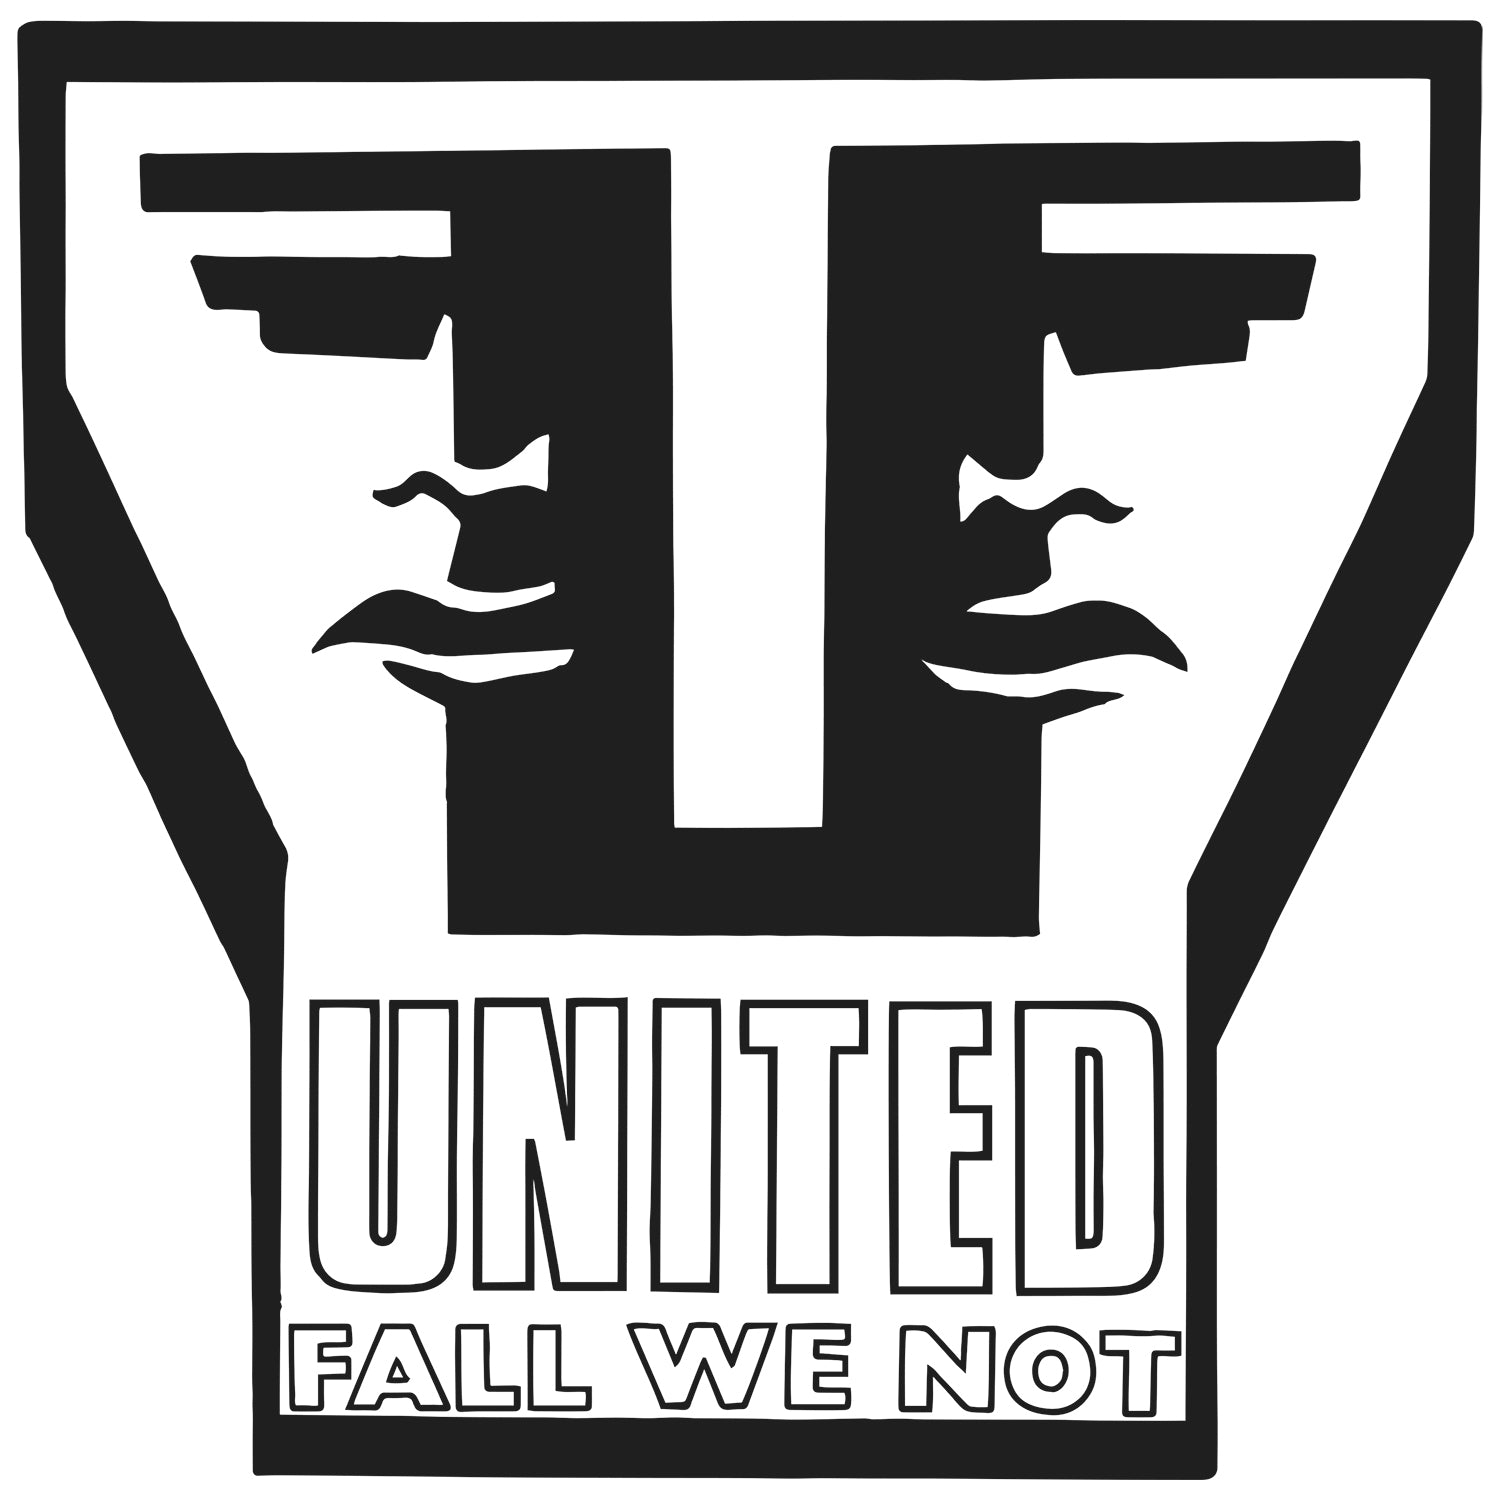 United Fall We Not